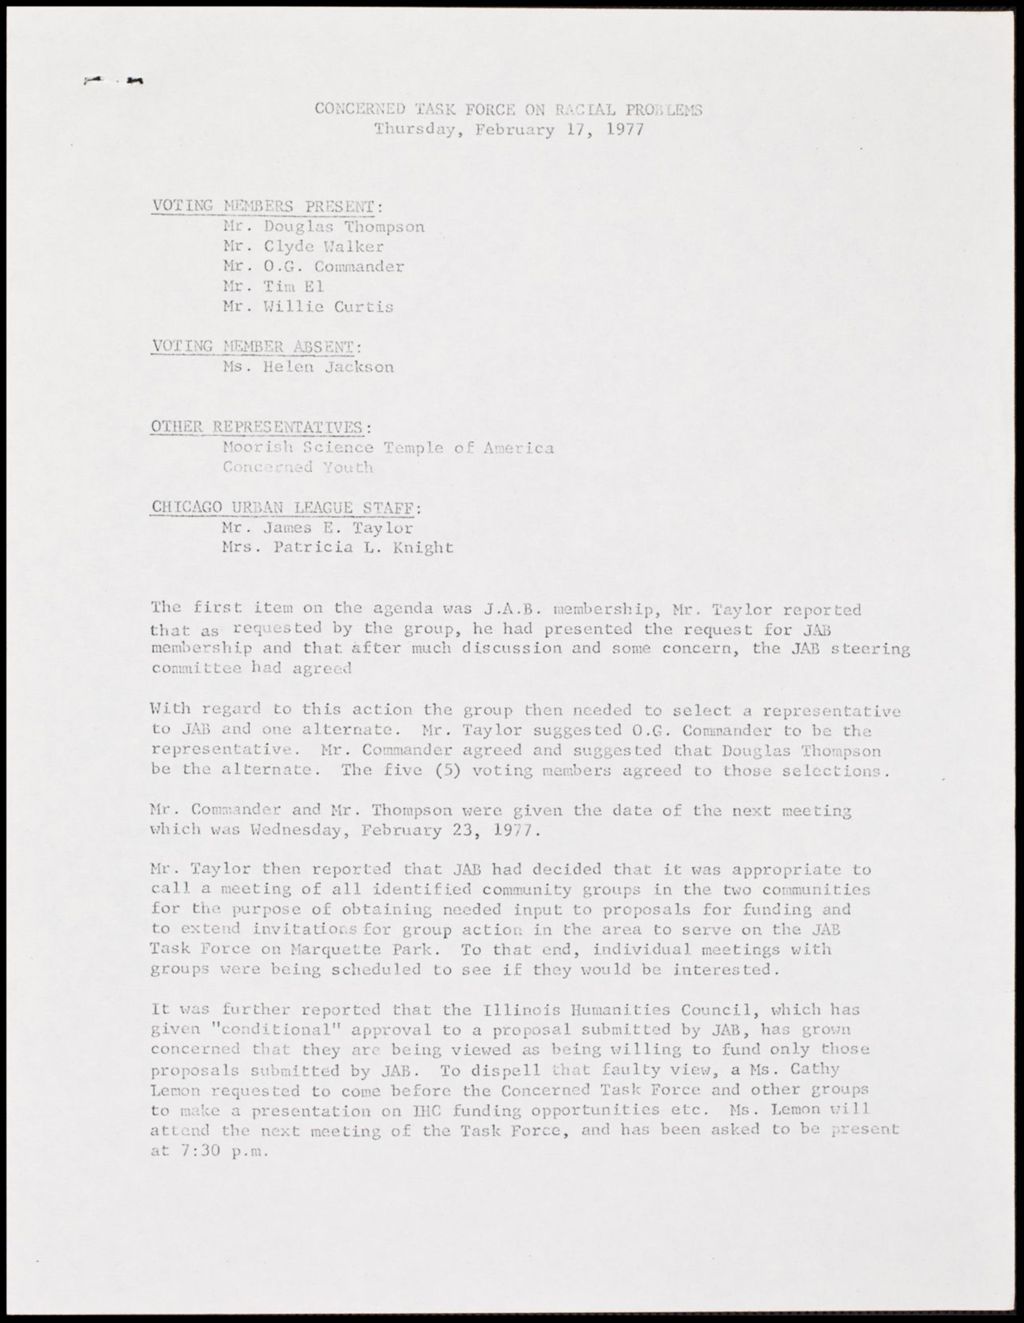 Concerned Task Force on Racial Problems, 1977 (Folder III-1835)